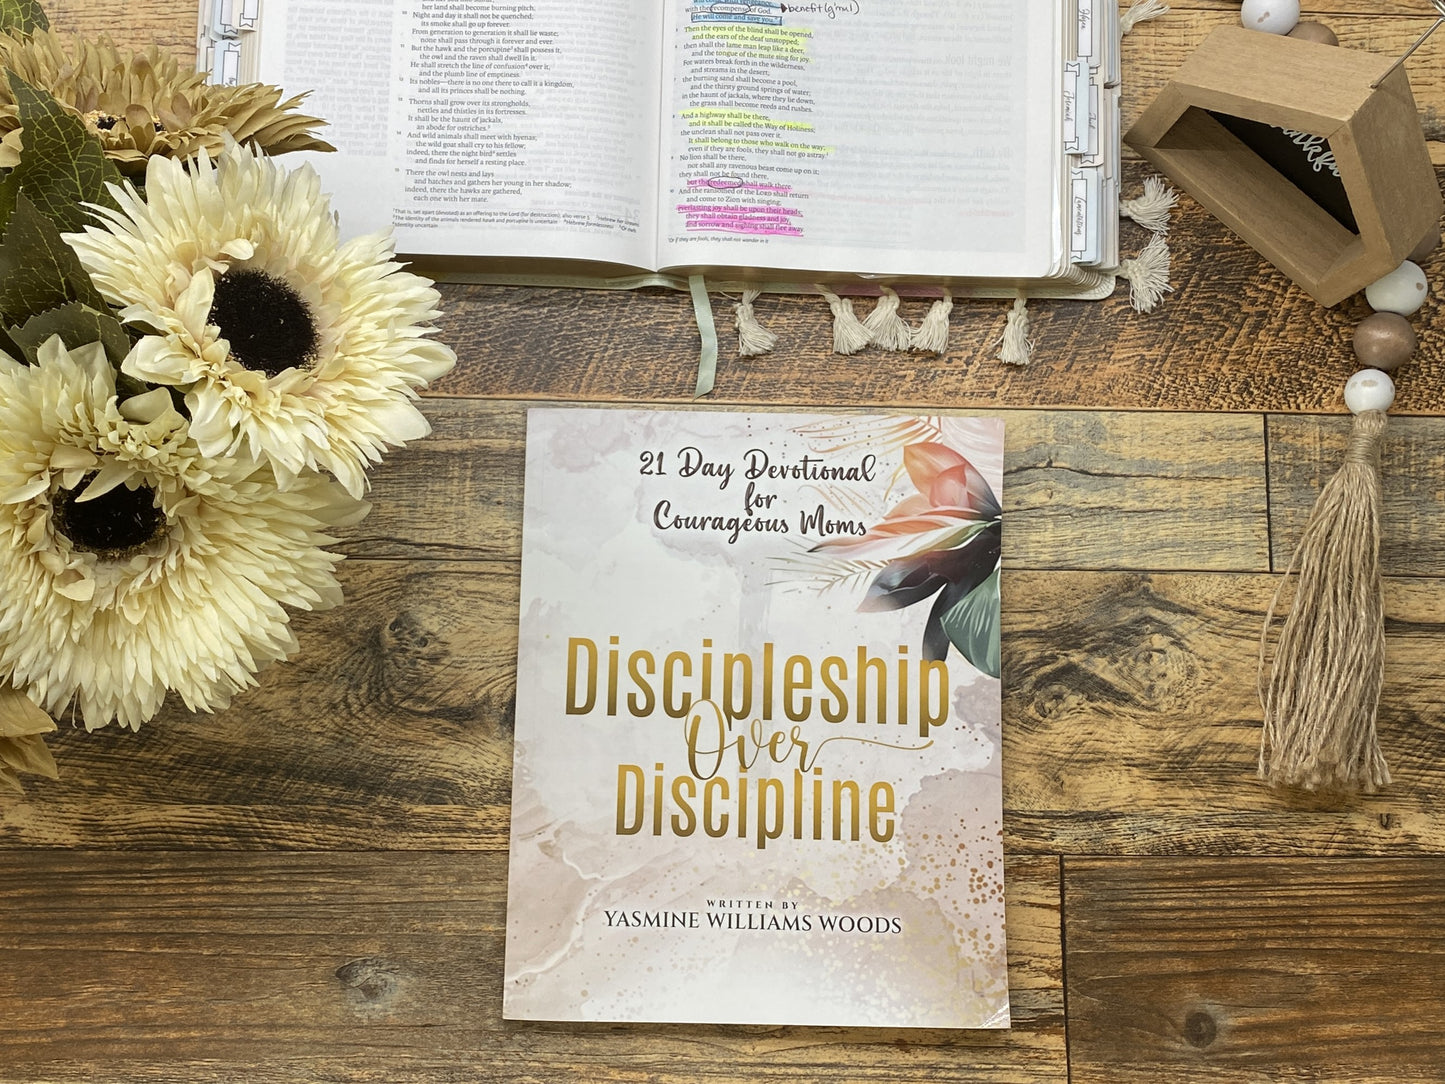 Discipleship over Discipline